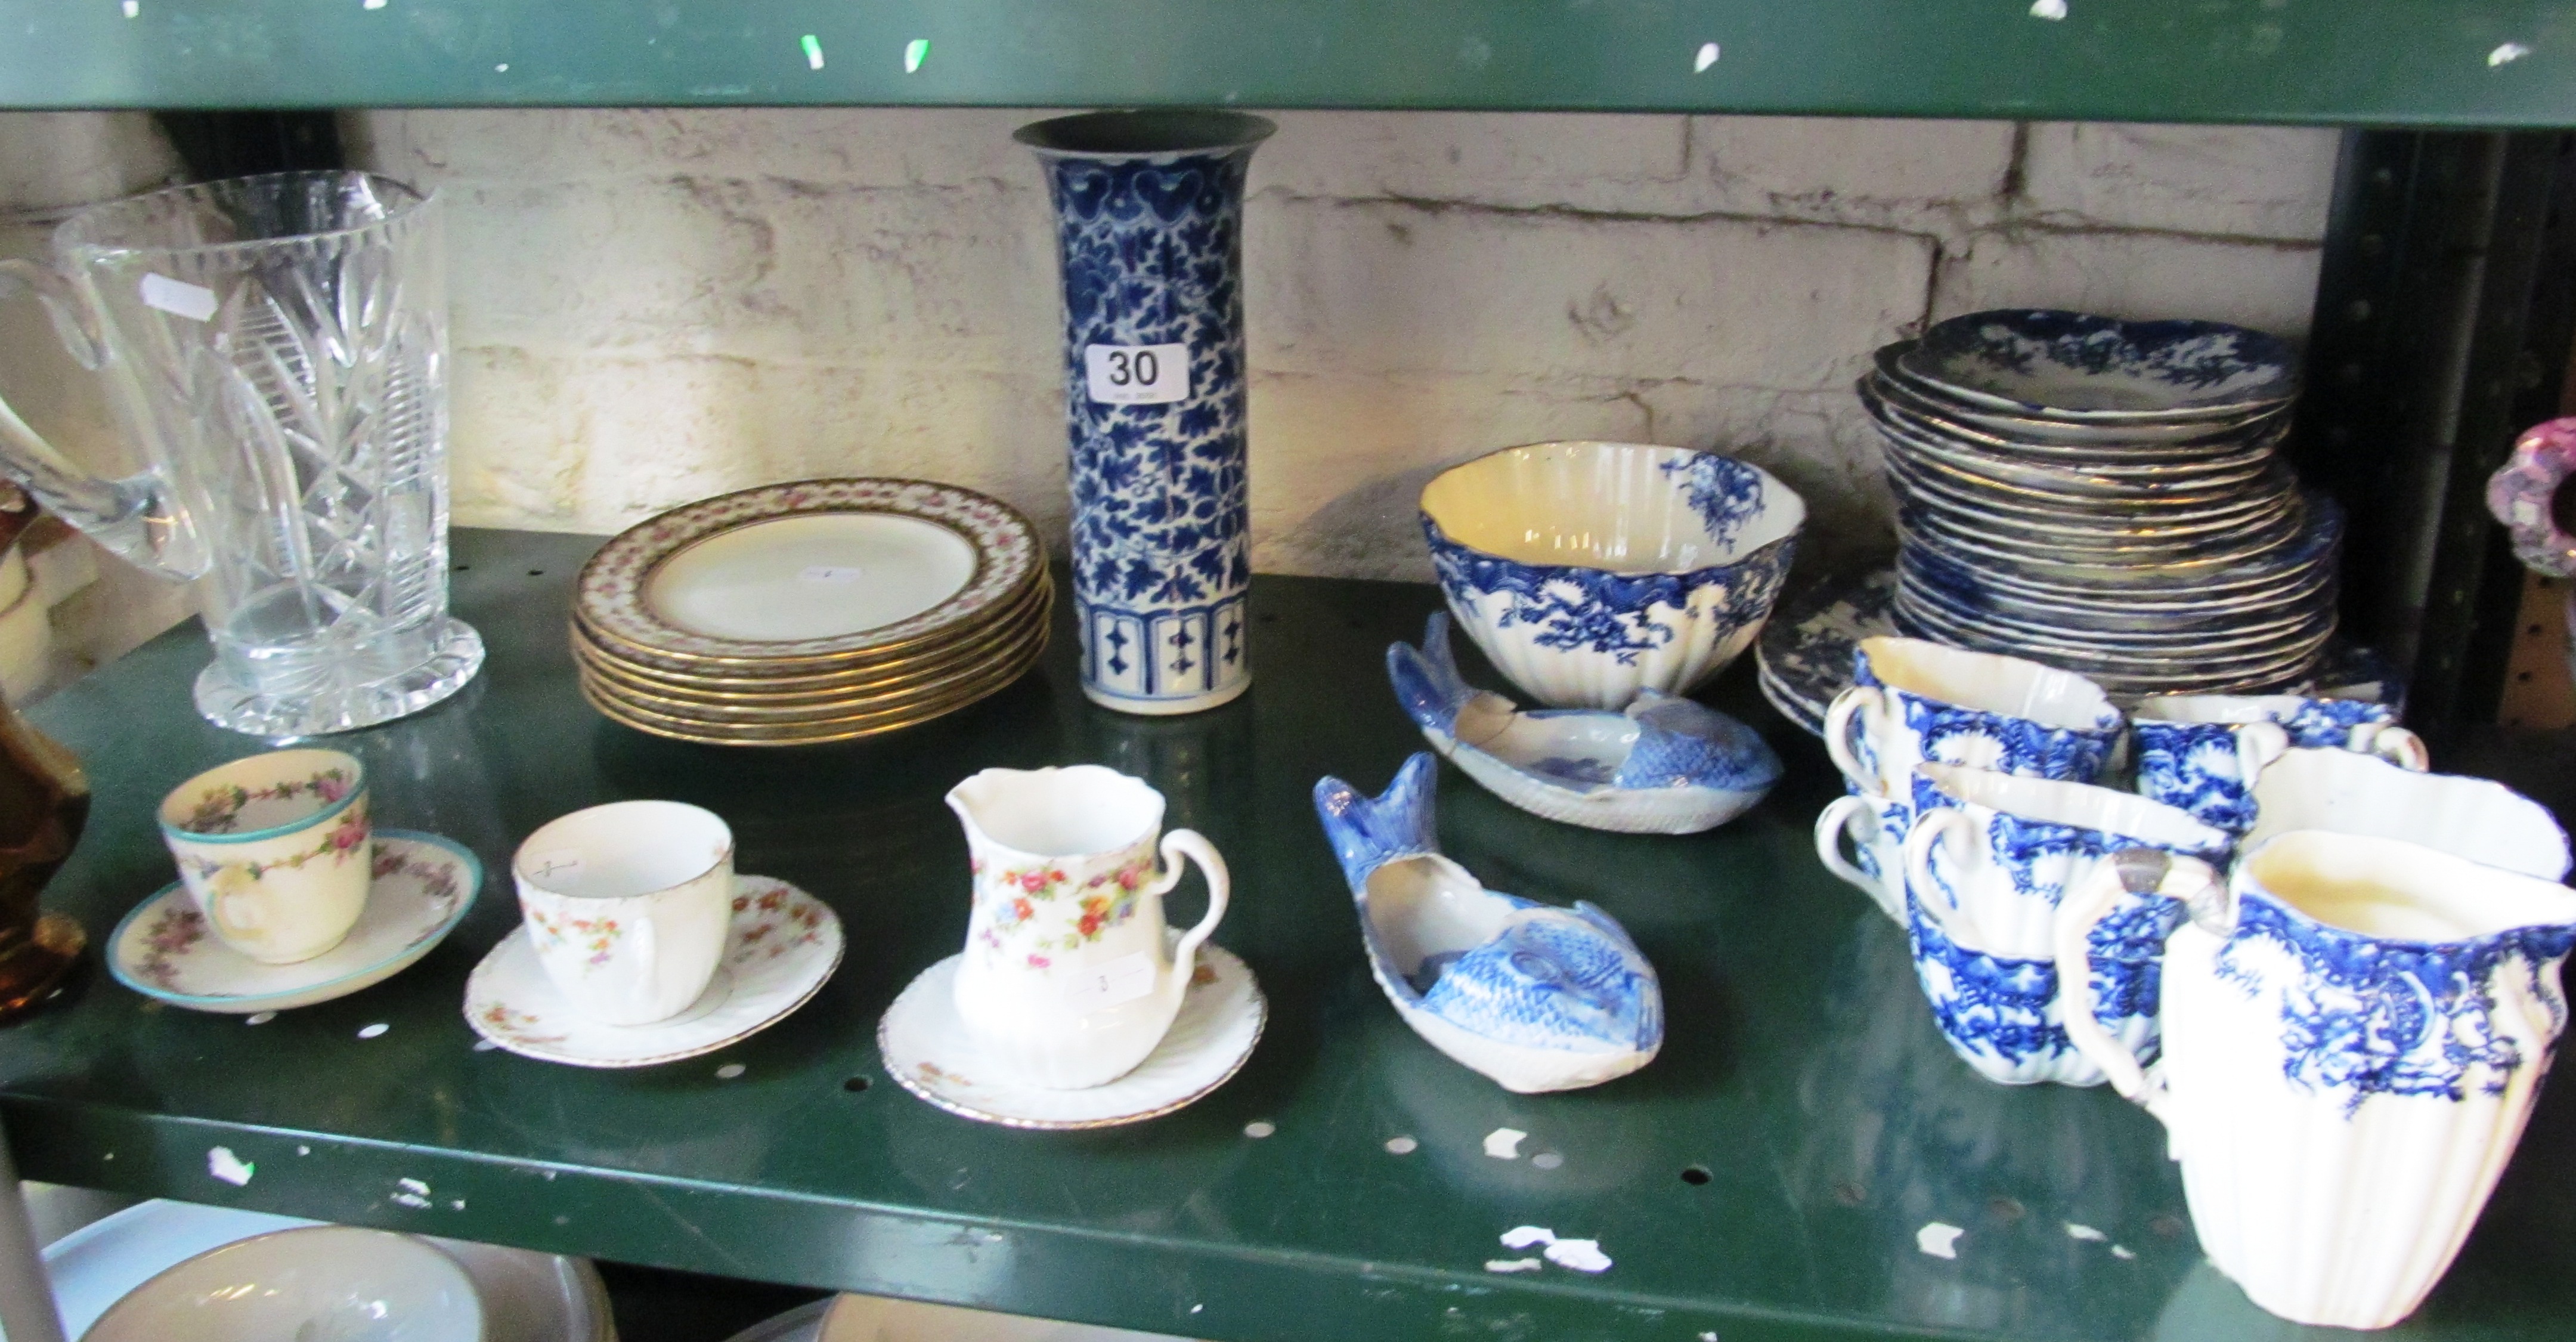 Six Cauldron plates, a glass jug and other china